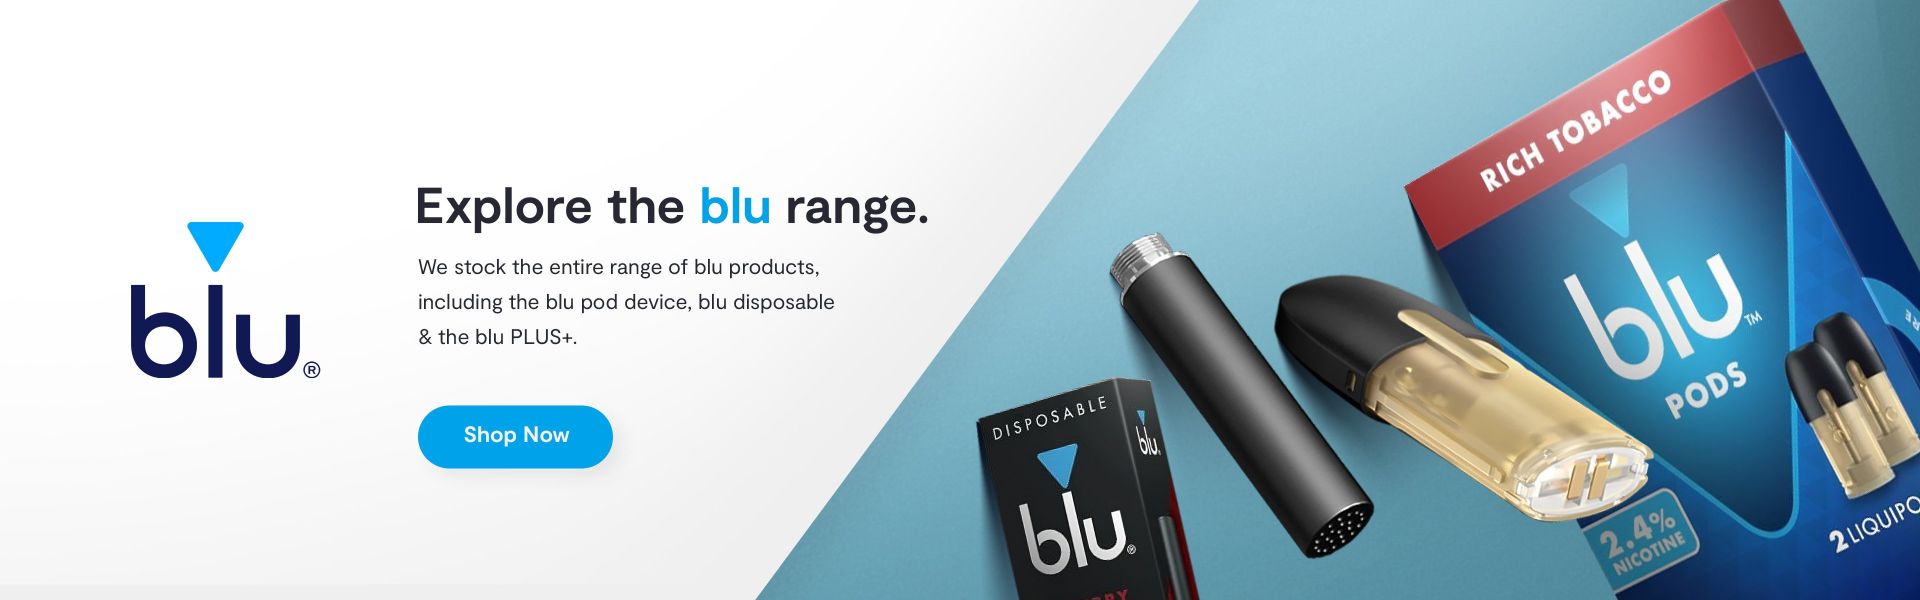 Blu Range